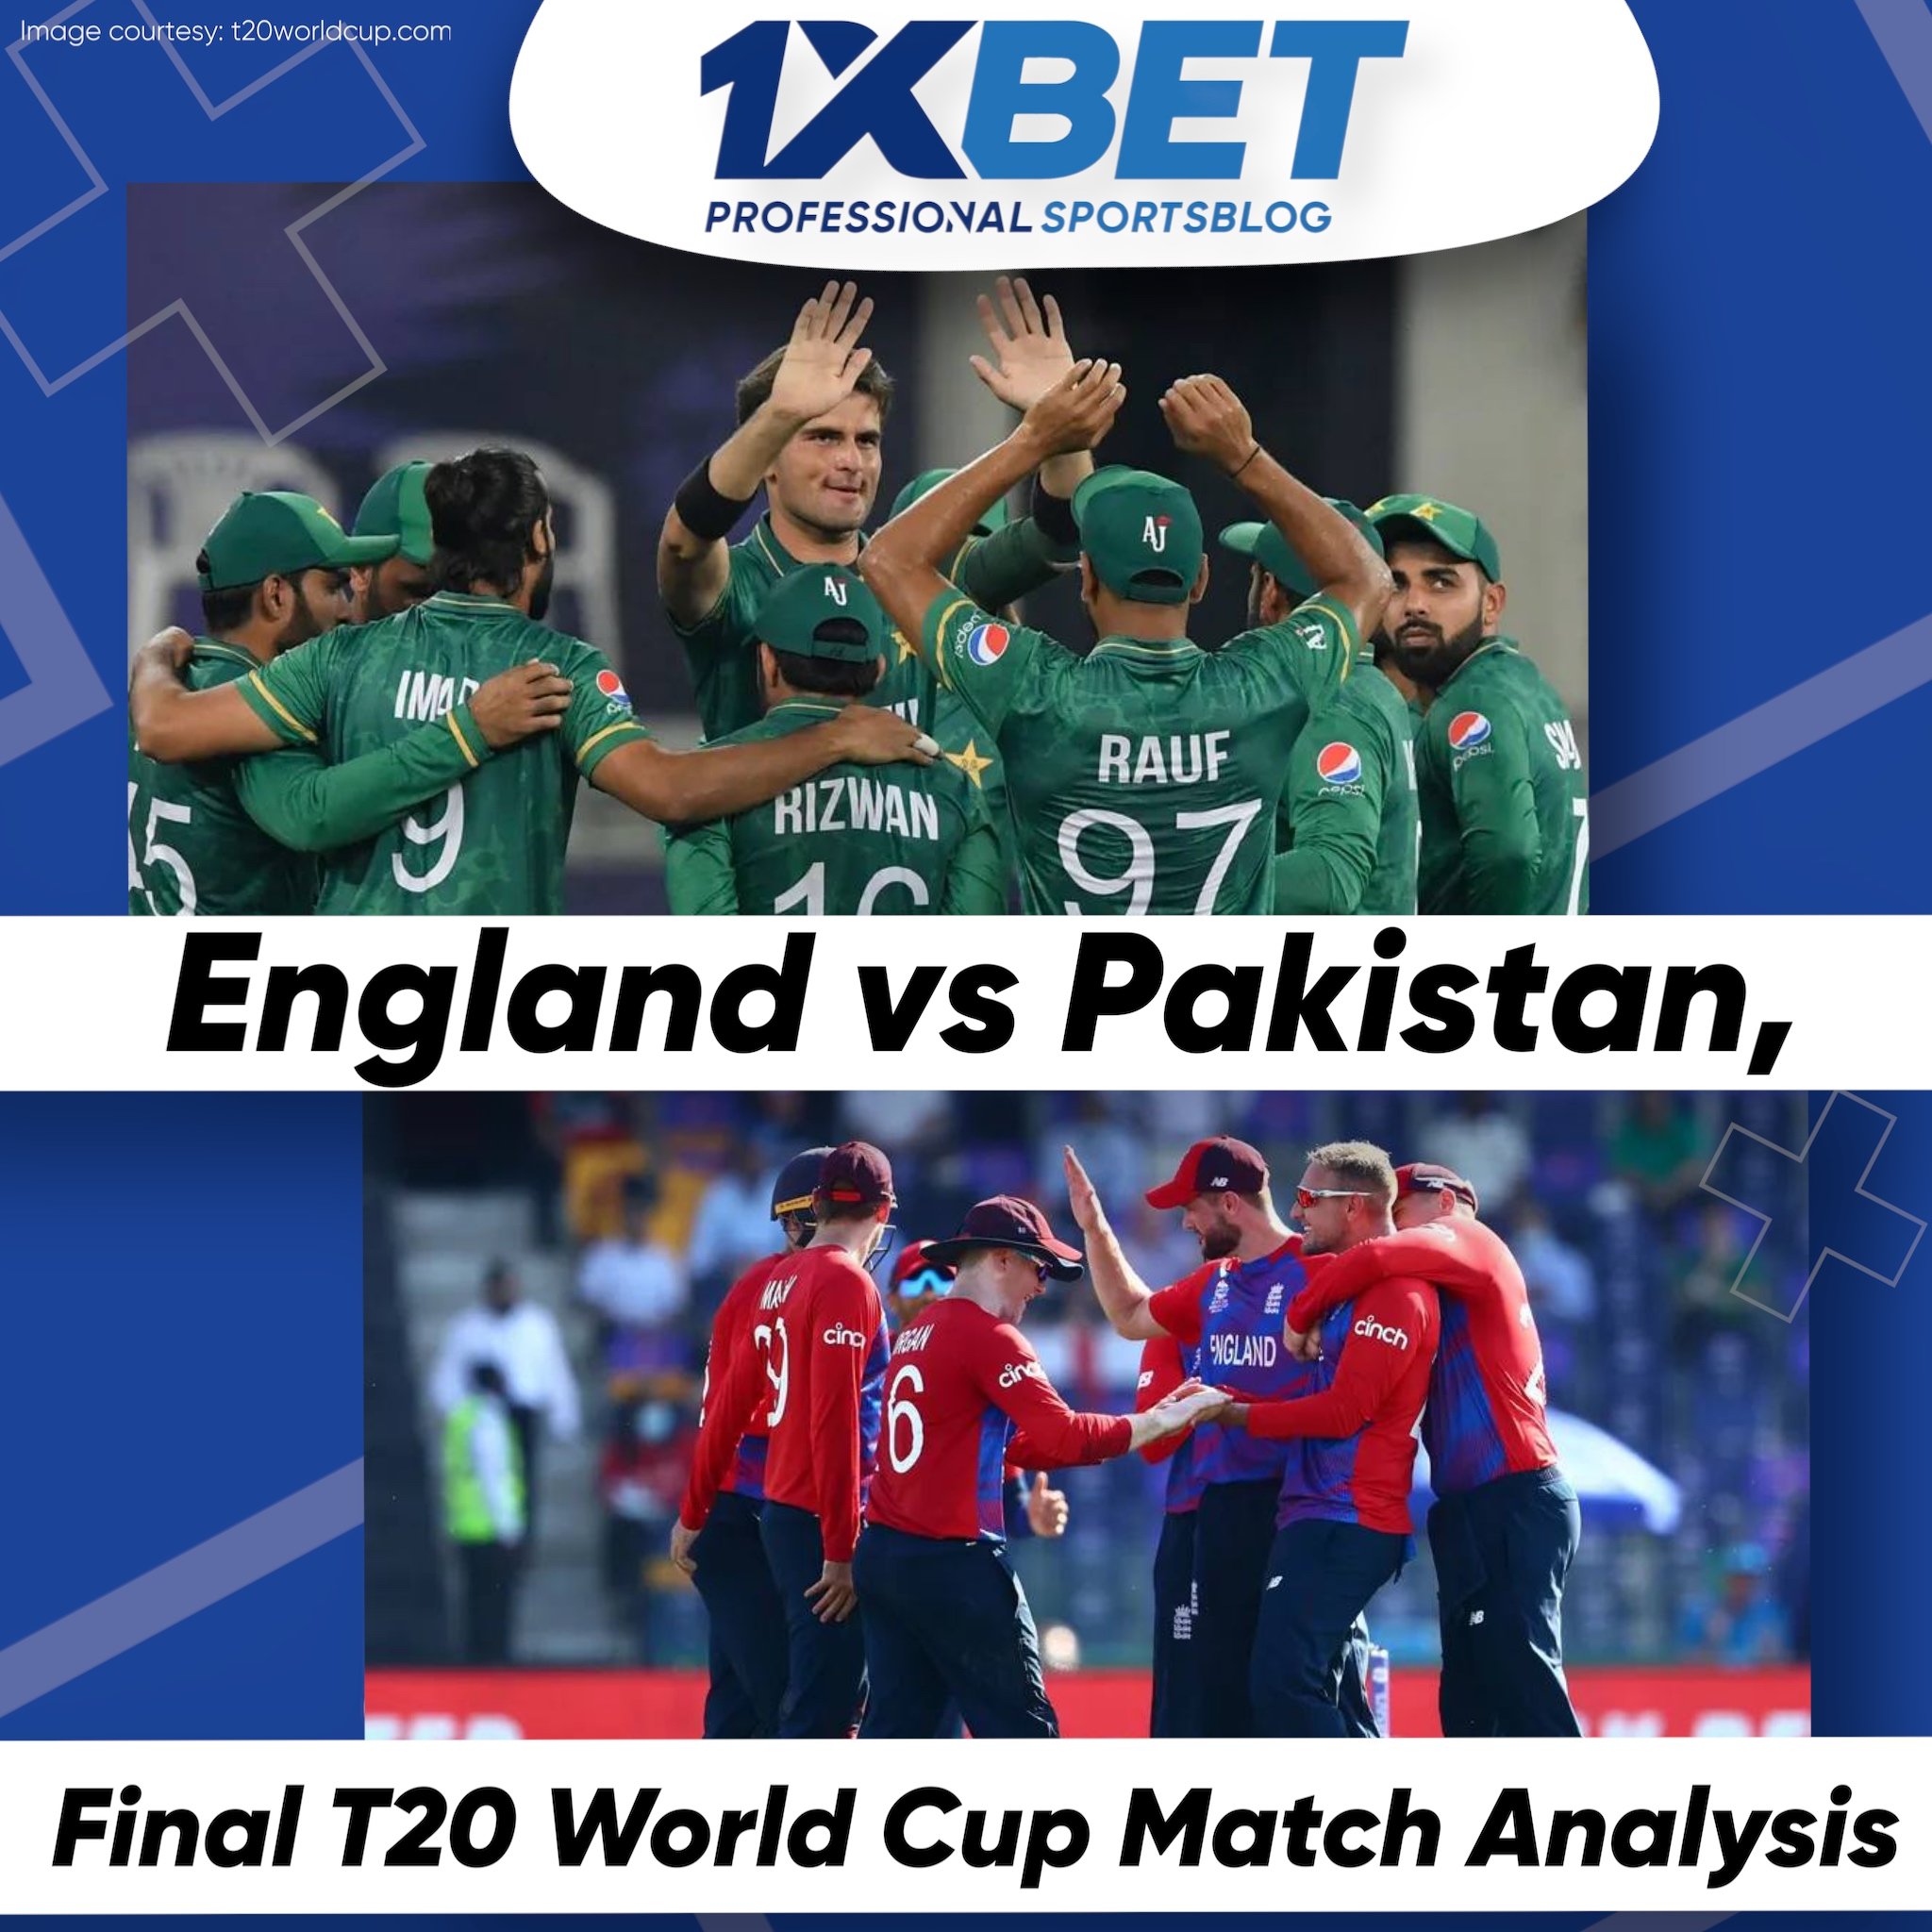 England vs Pakistan, Final T20 World Cup Match Analysis